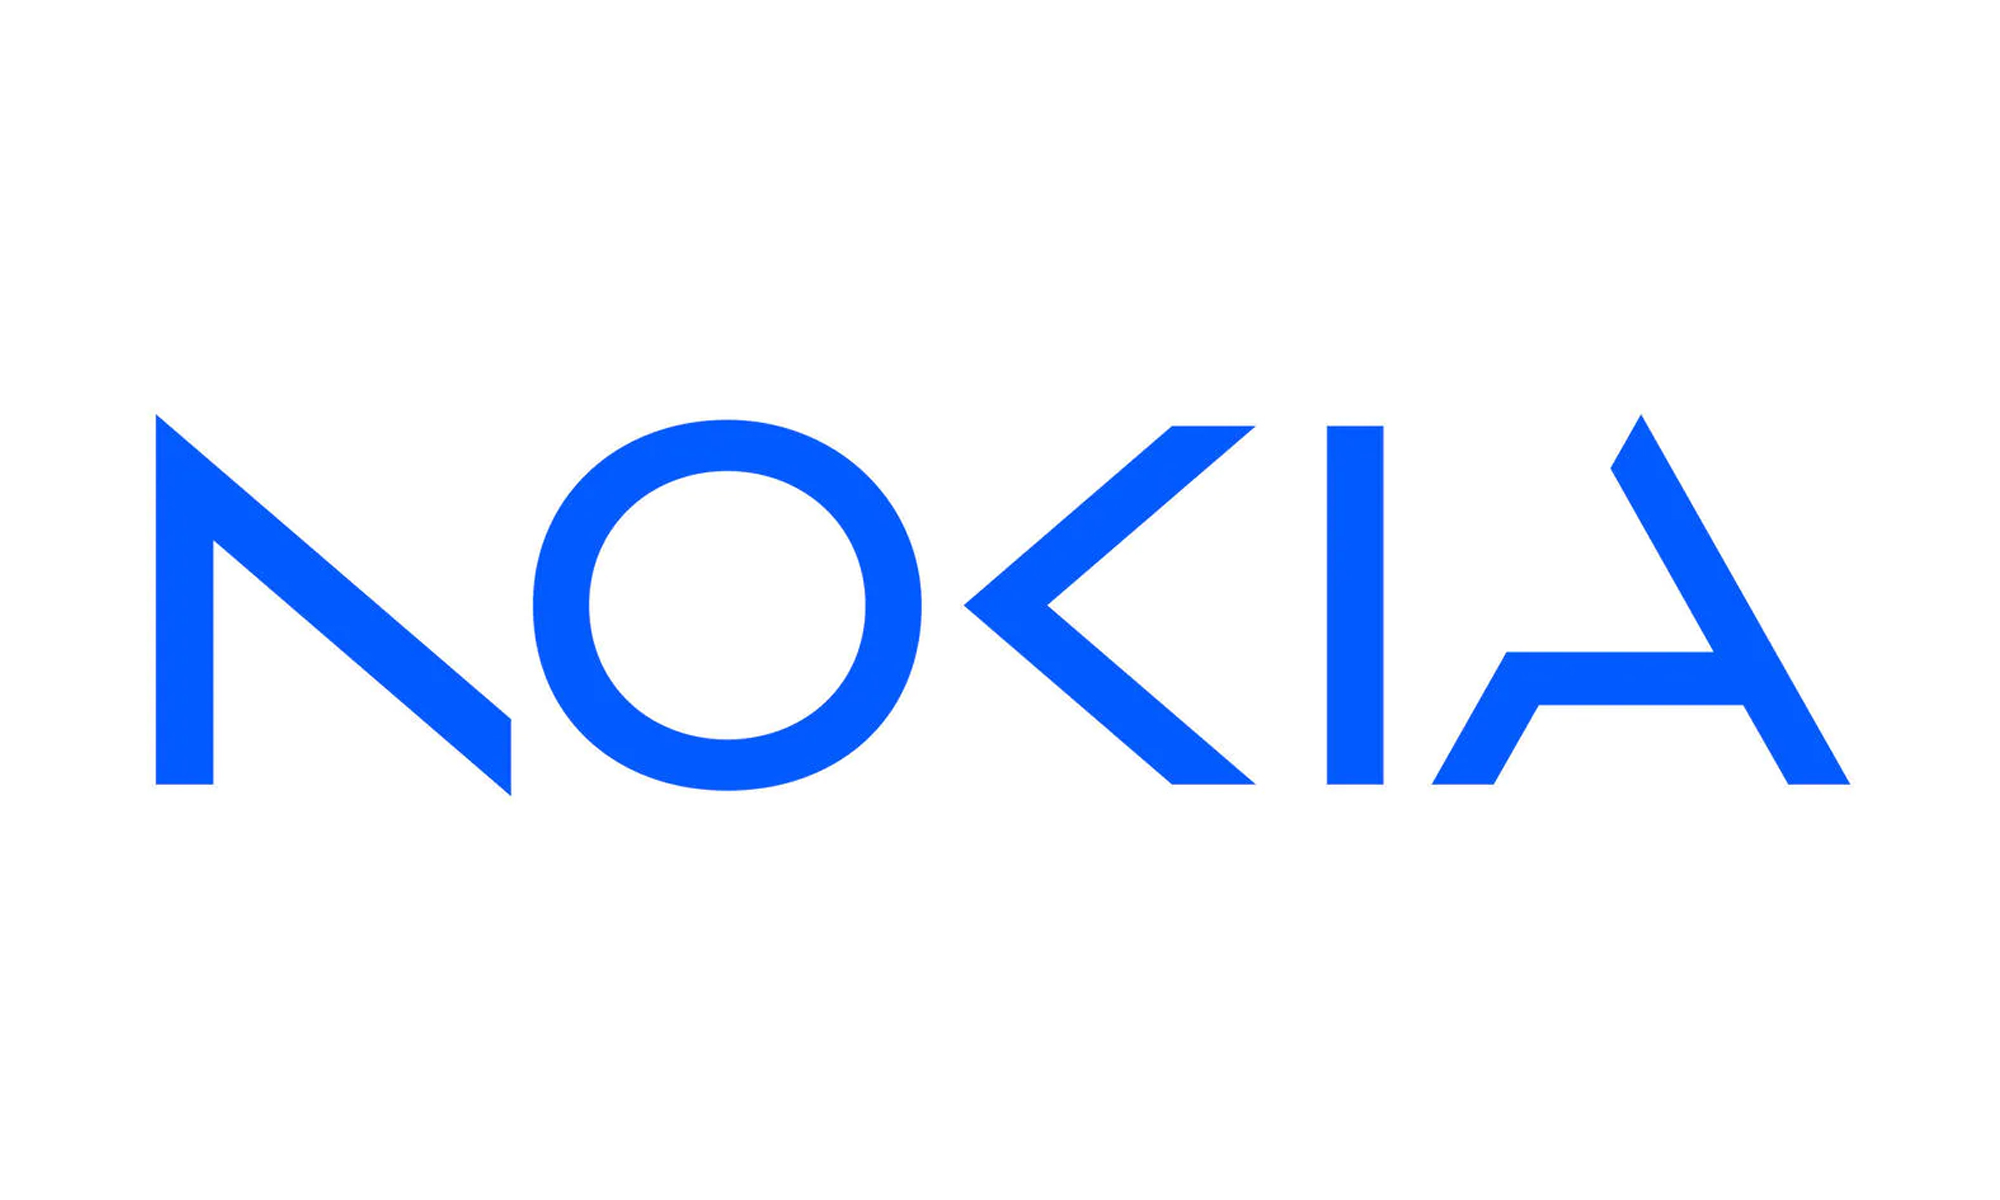 Nokia has recently unveiled brand new logo